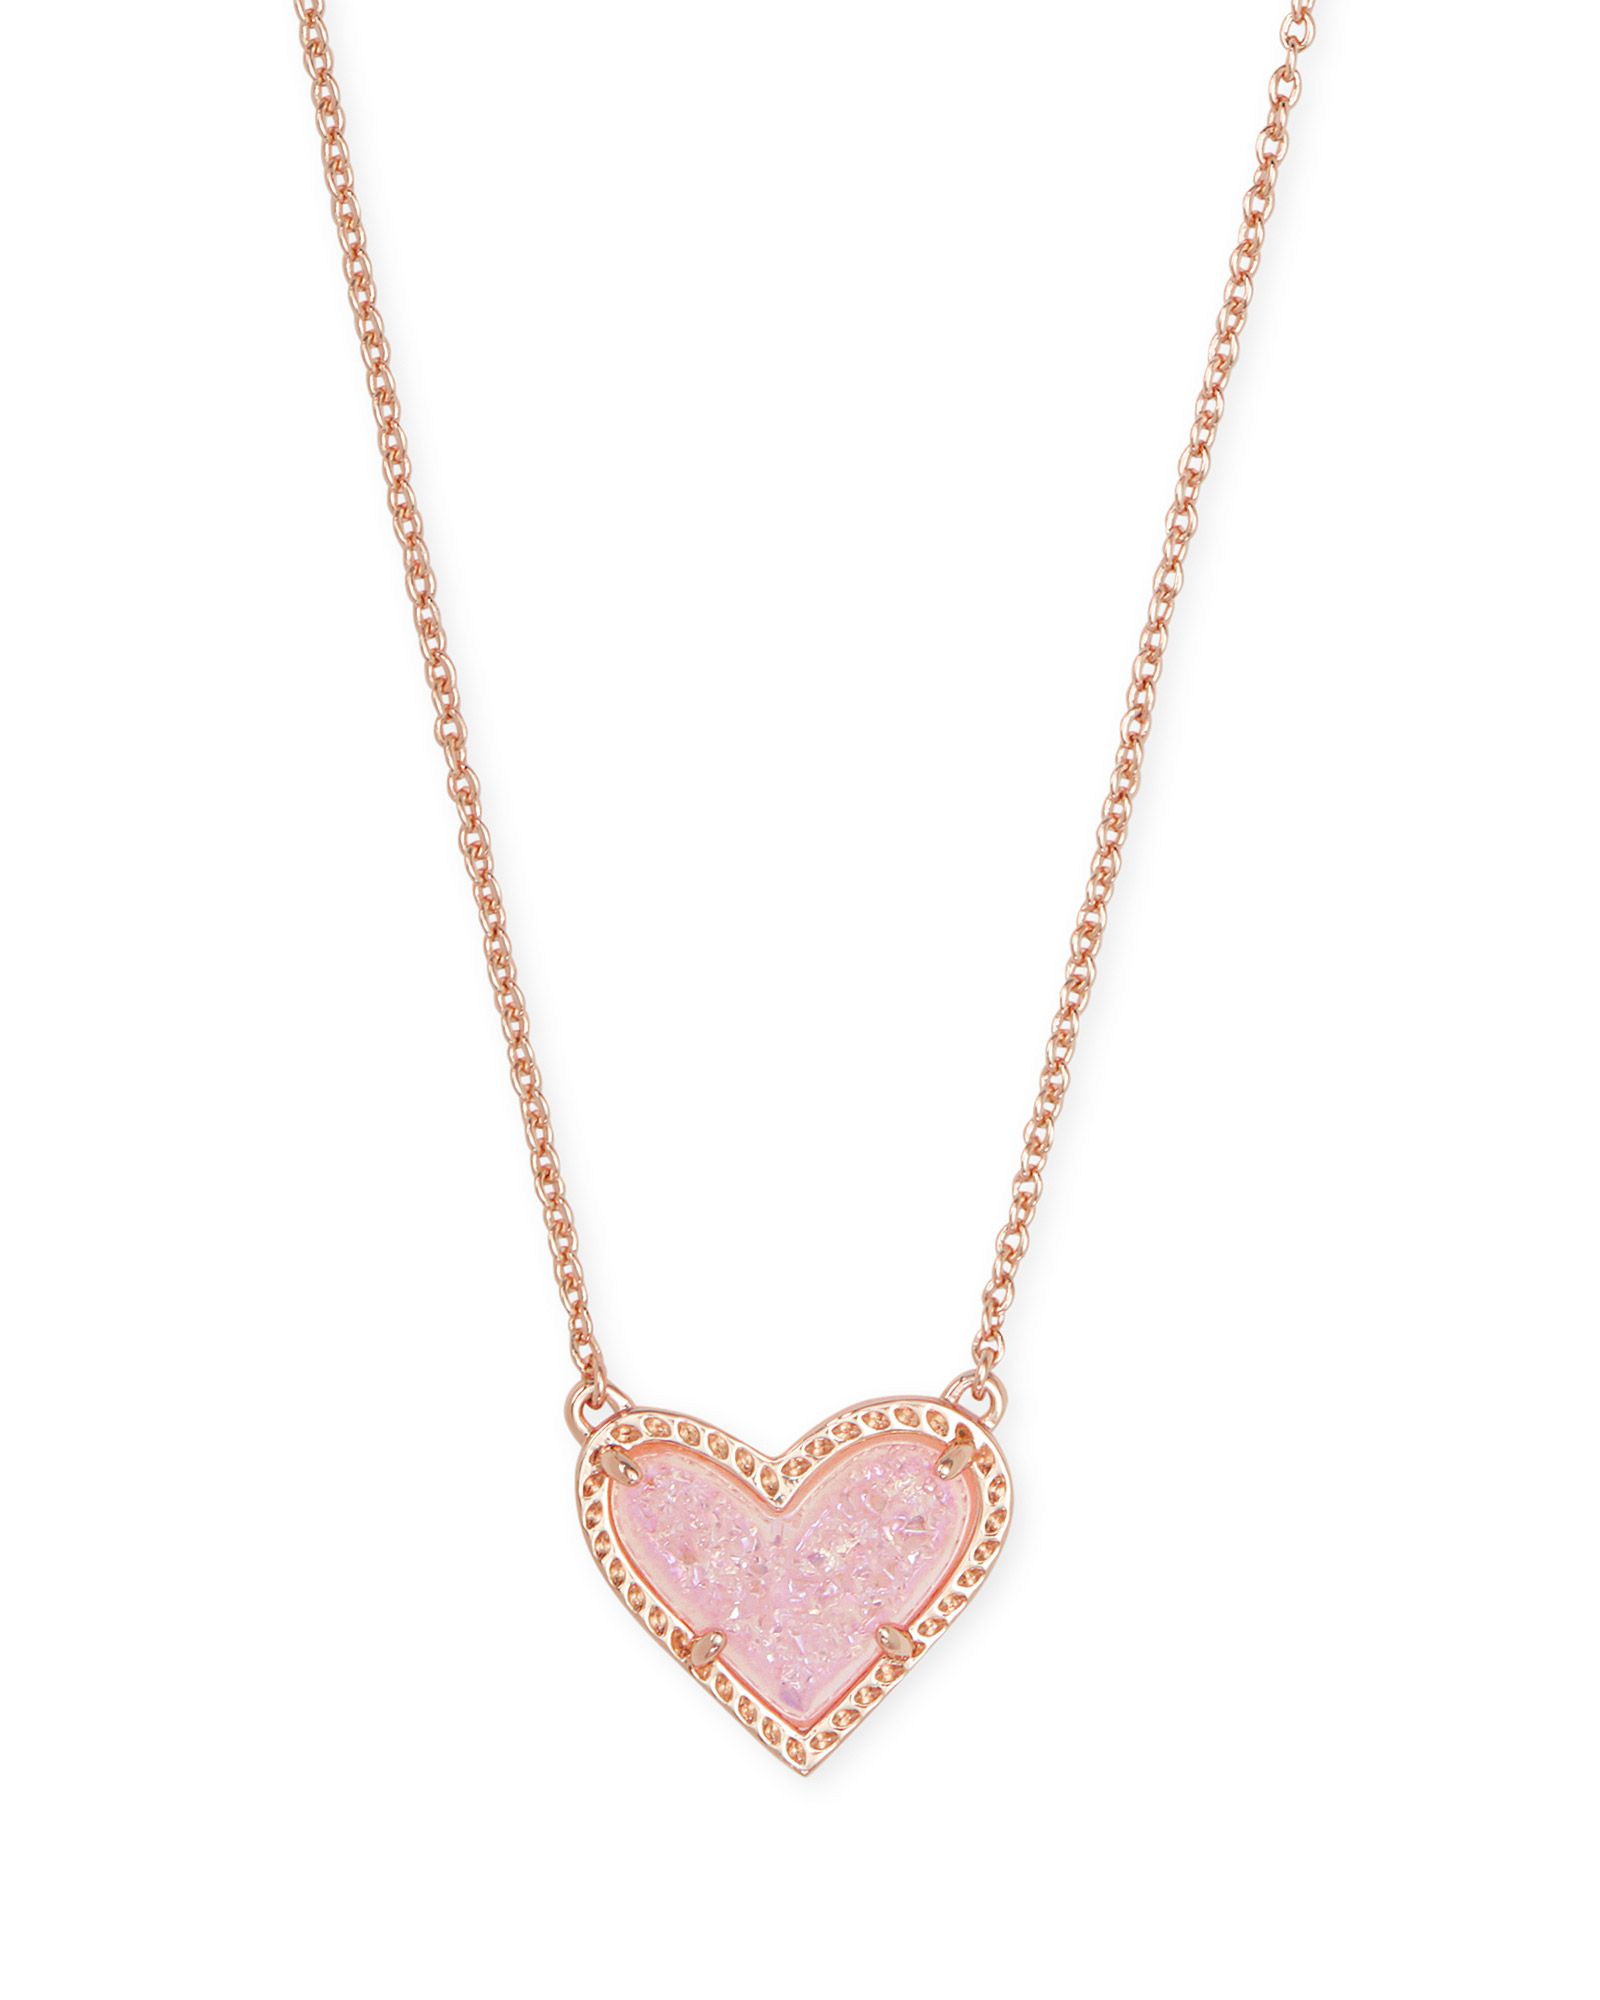 Ari Heart Rose Gold Short Pendant Necklace in Pink Drusy | Kendra Scott